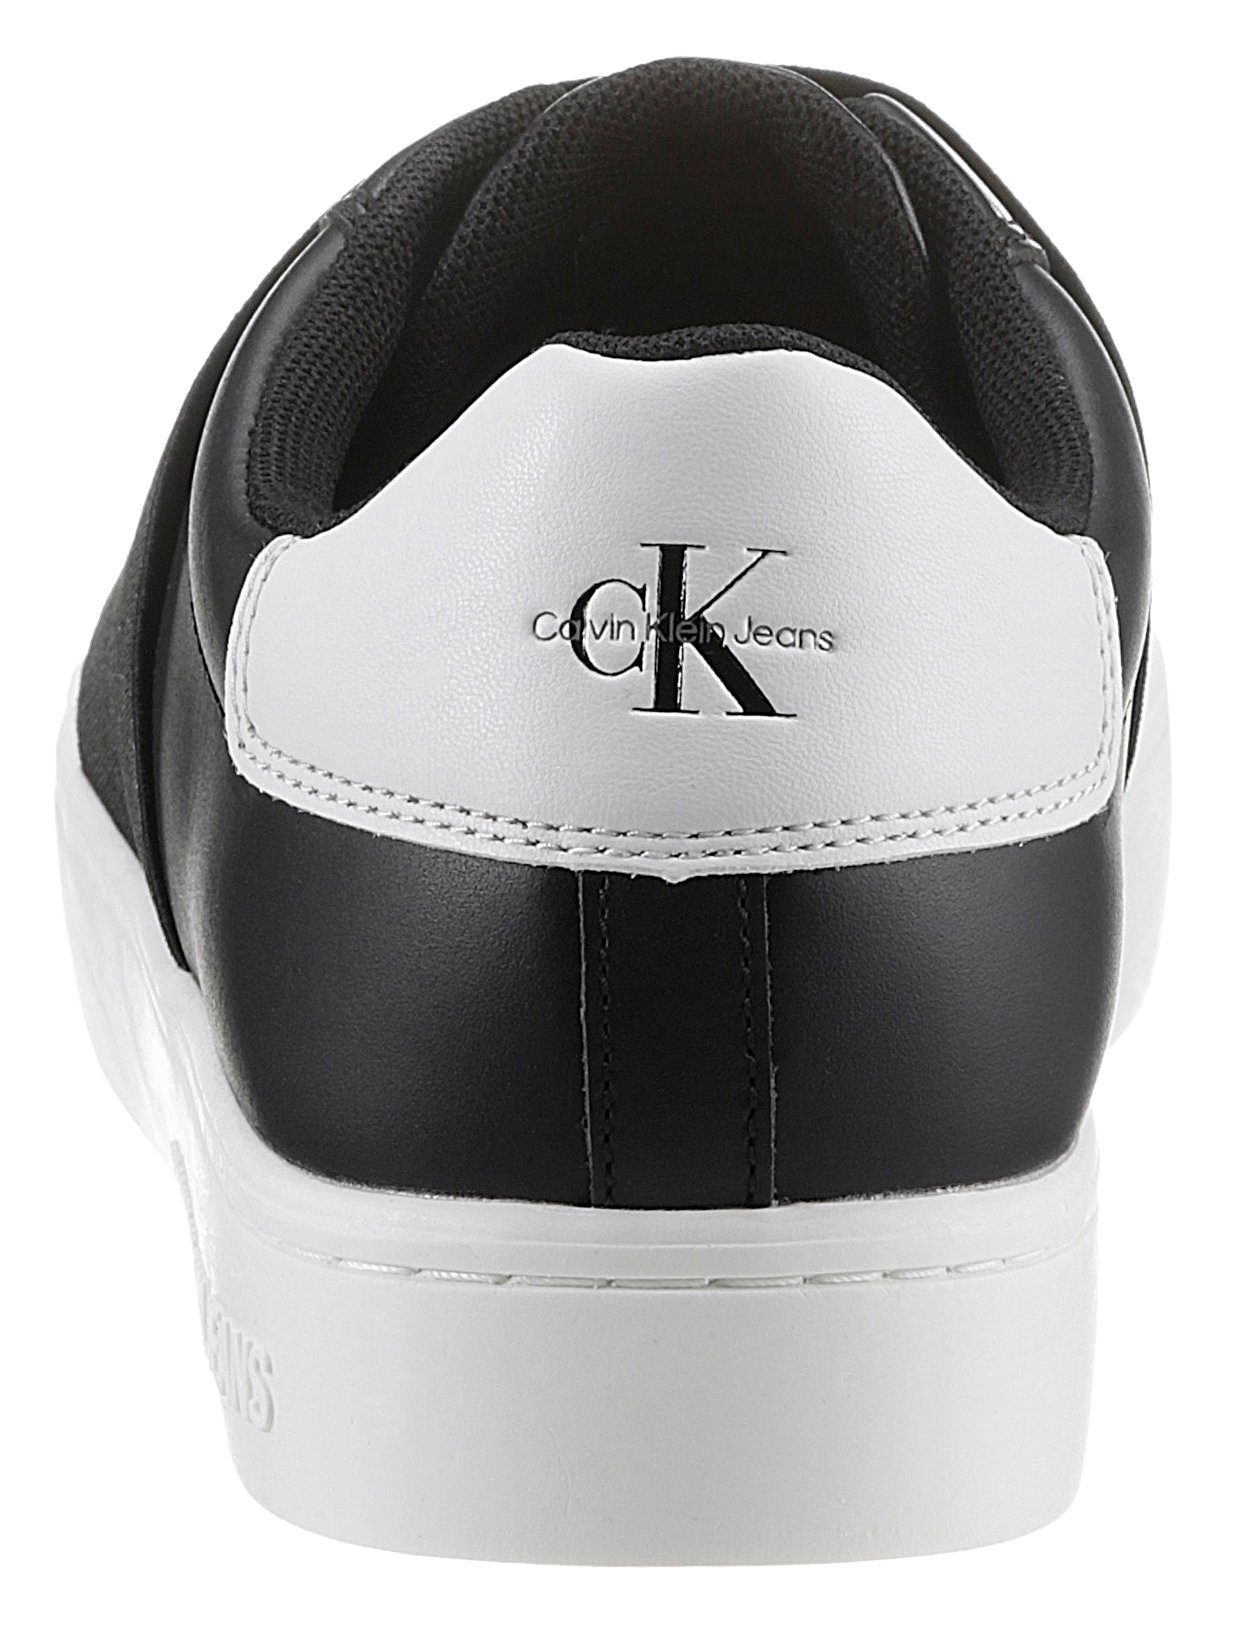 ELASTIC Jeans Form schmaler Calvin CUPSOLE in LTH schwarz Klein CASUAL Slip-On Sneaker